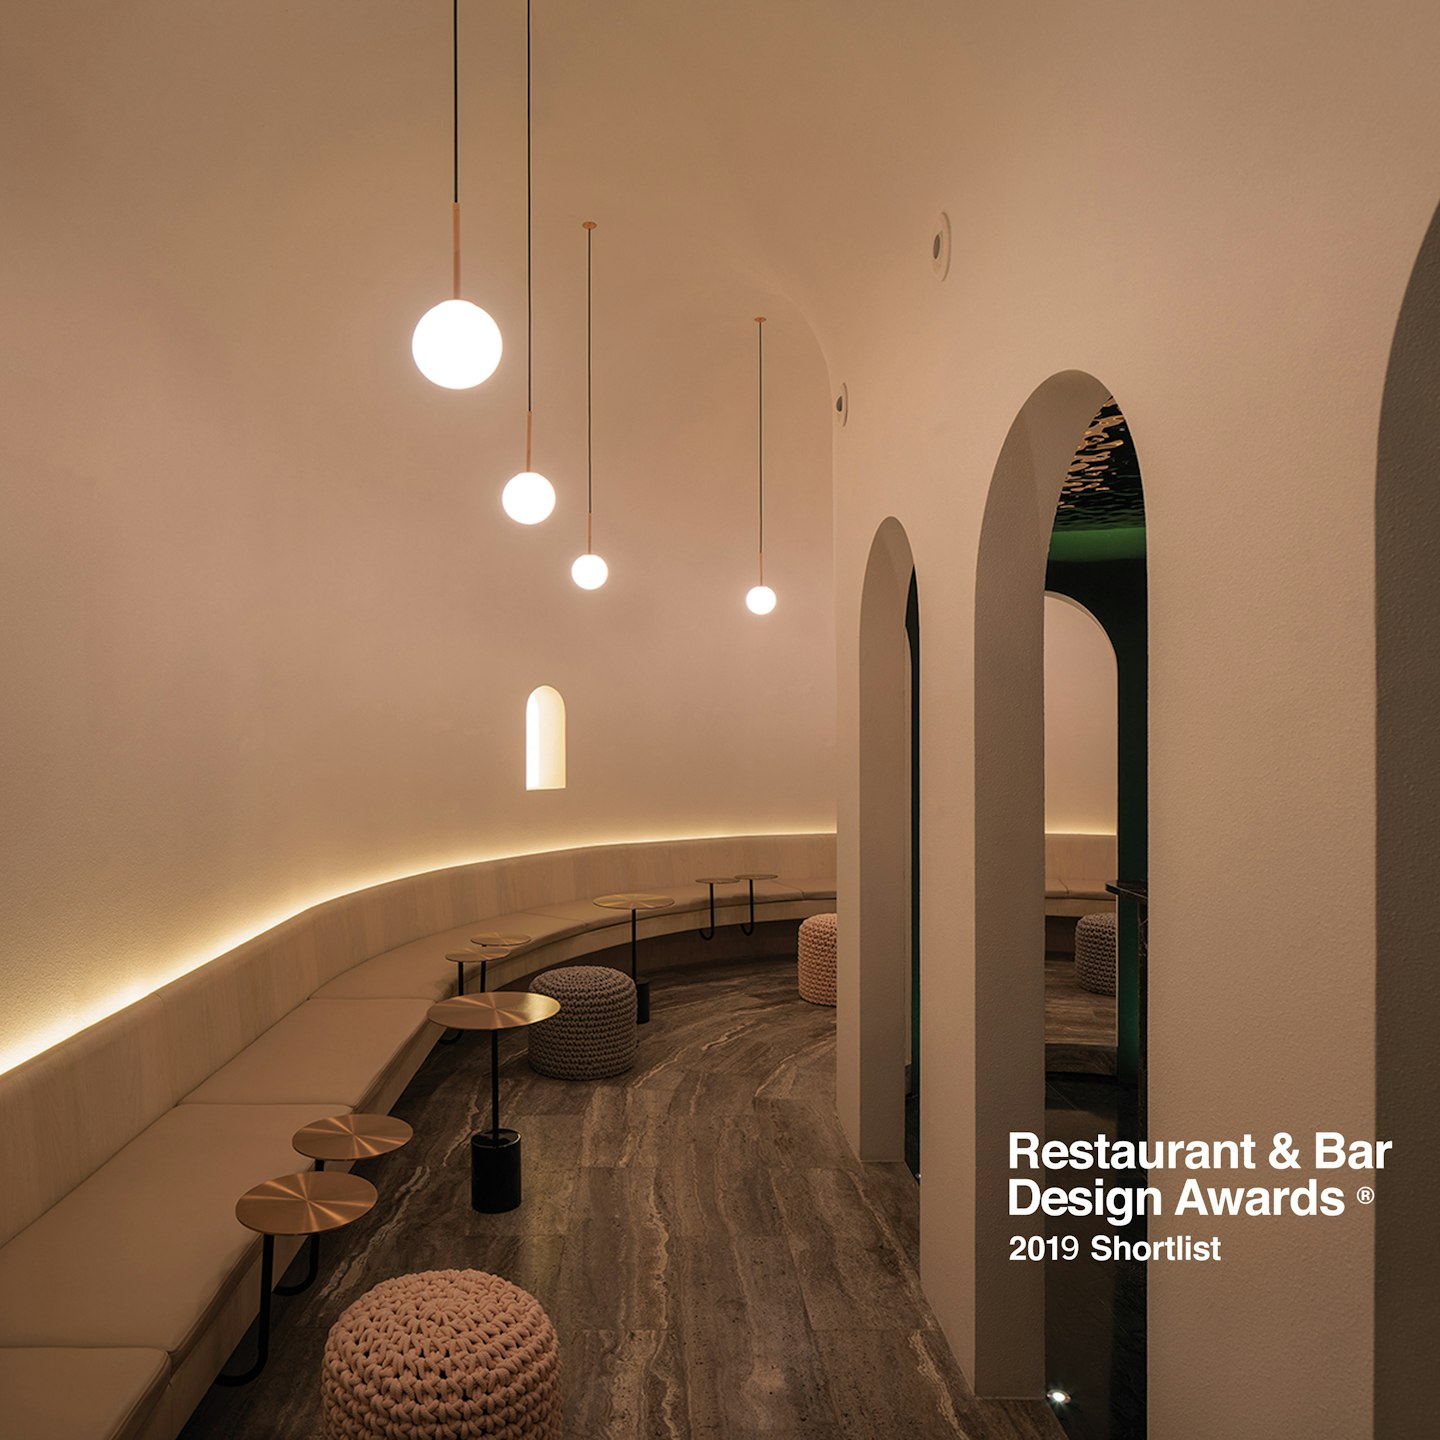 The Restaurant & Bar Design Awards Shortlists Bar Lotus in Shanghai